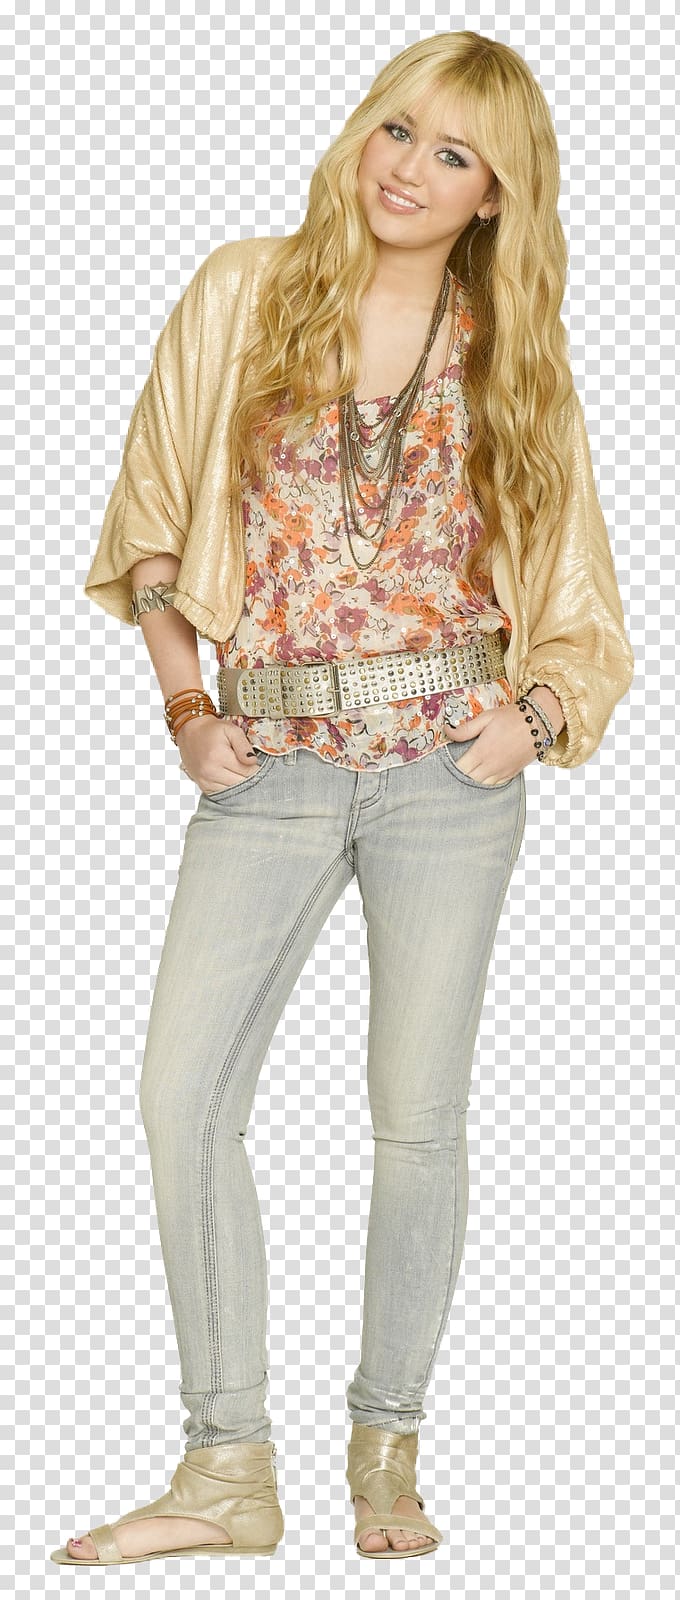 Miley Cyrus Hannah Montana, Season 4 Hannah Montana Forever Hannah Montana 3, miley cyrus transparent background PNG clipart